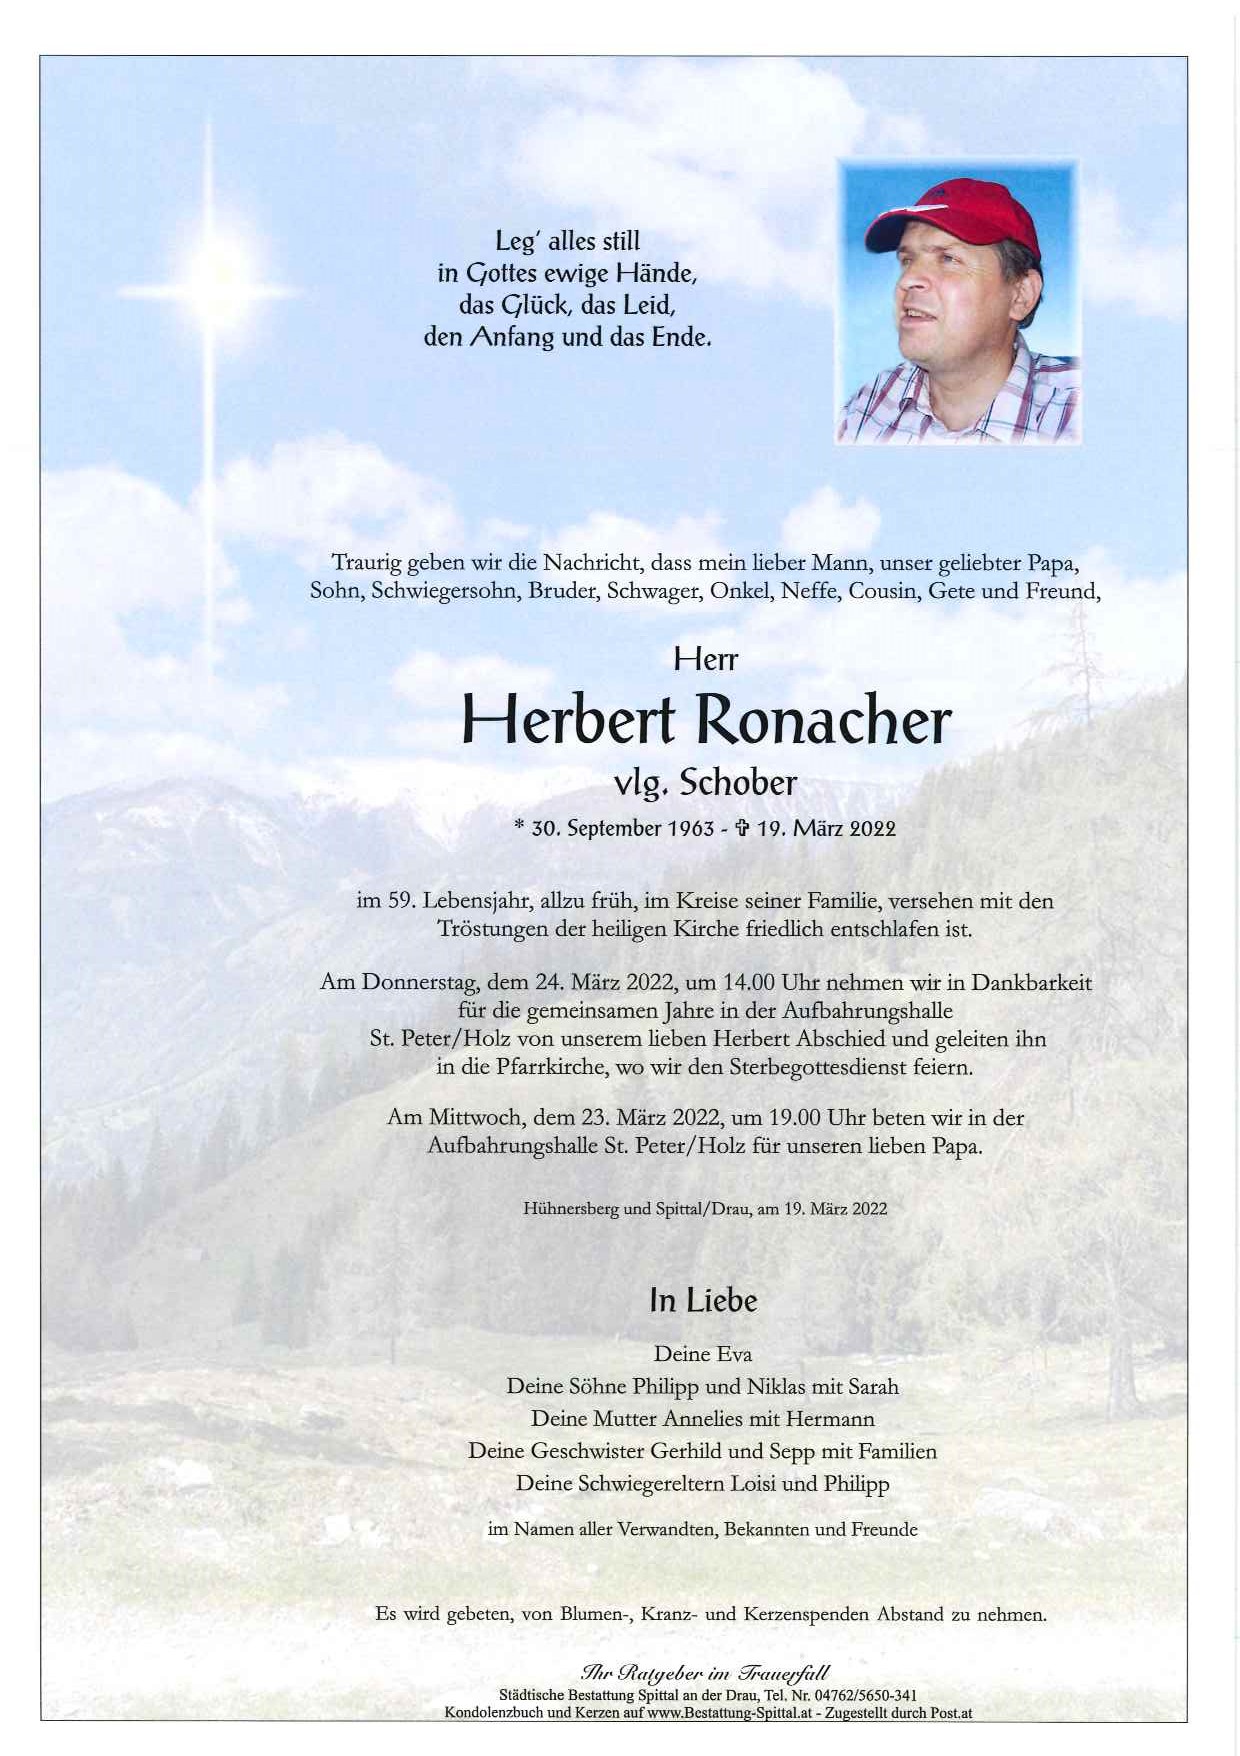 Herbert Ronacher